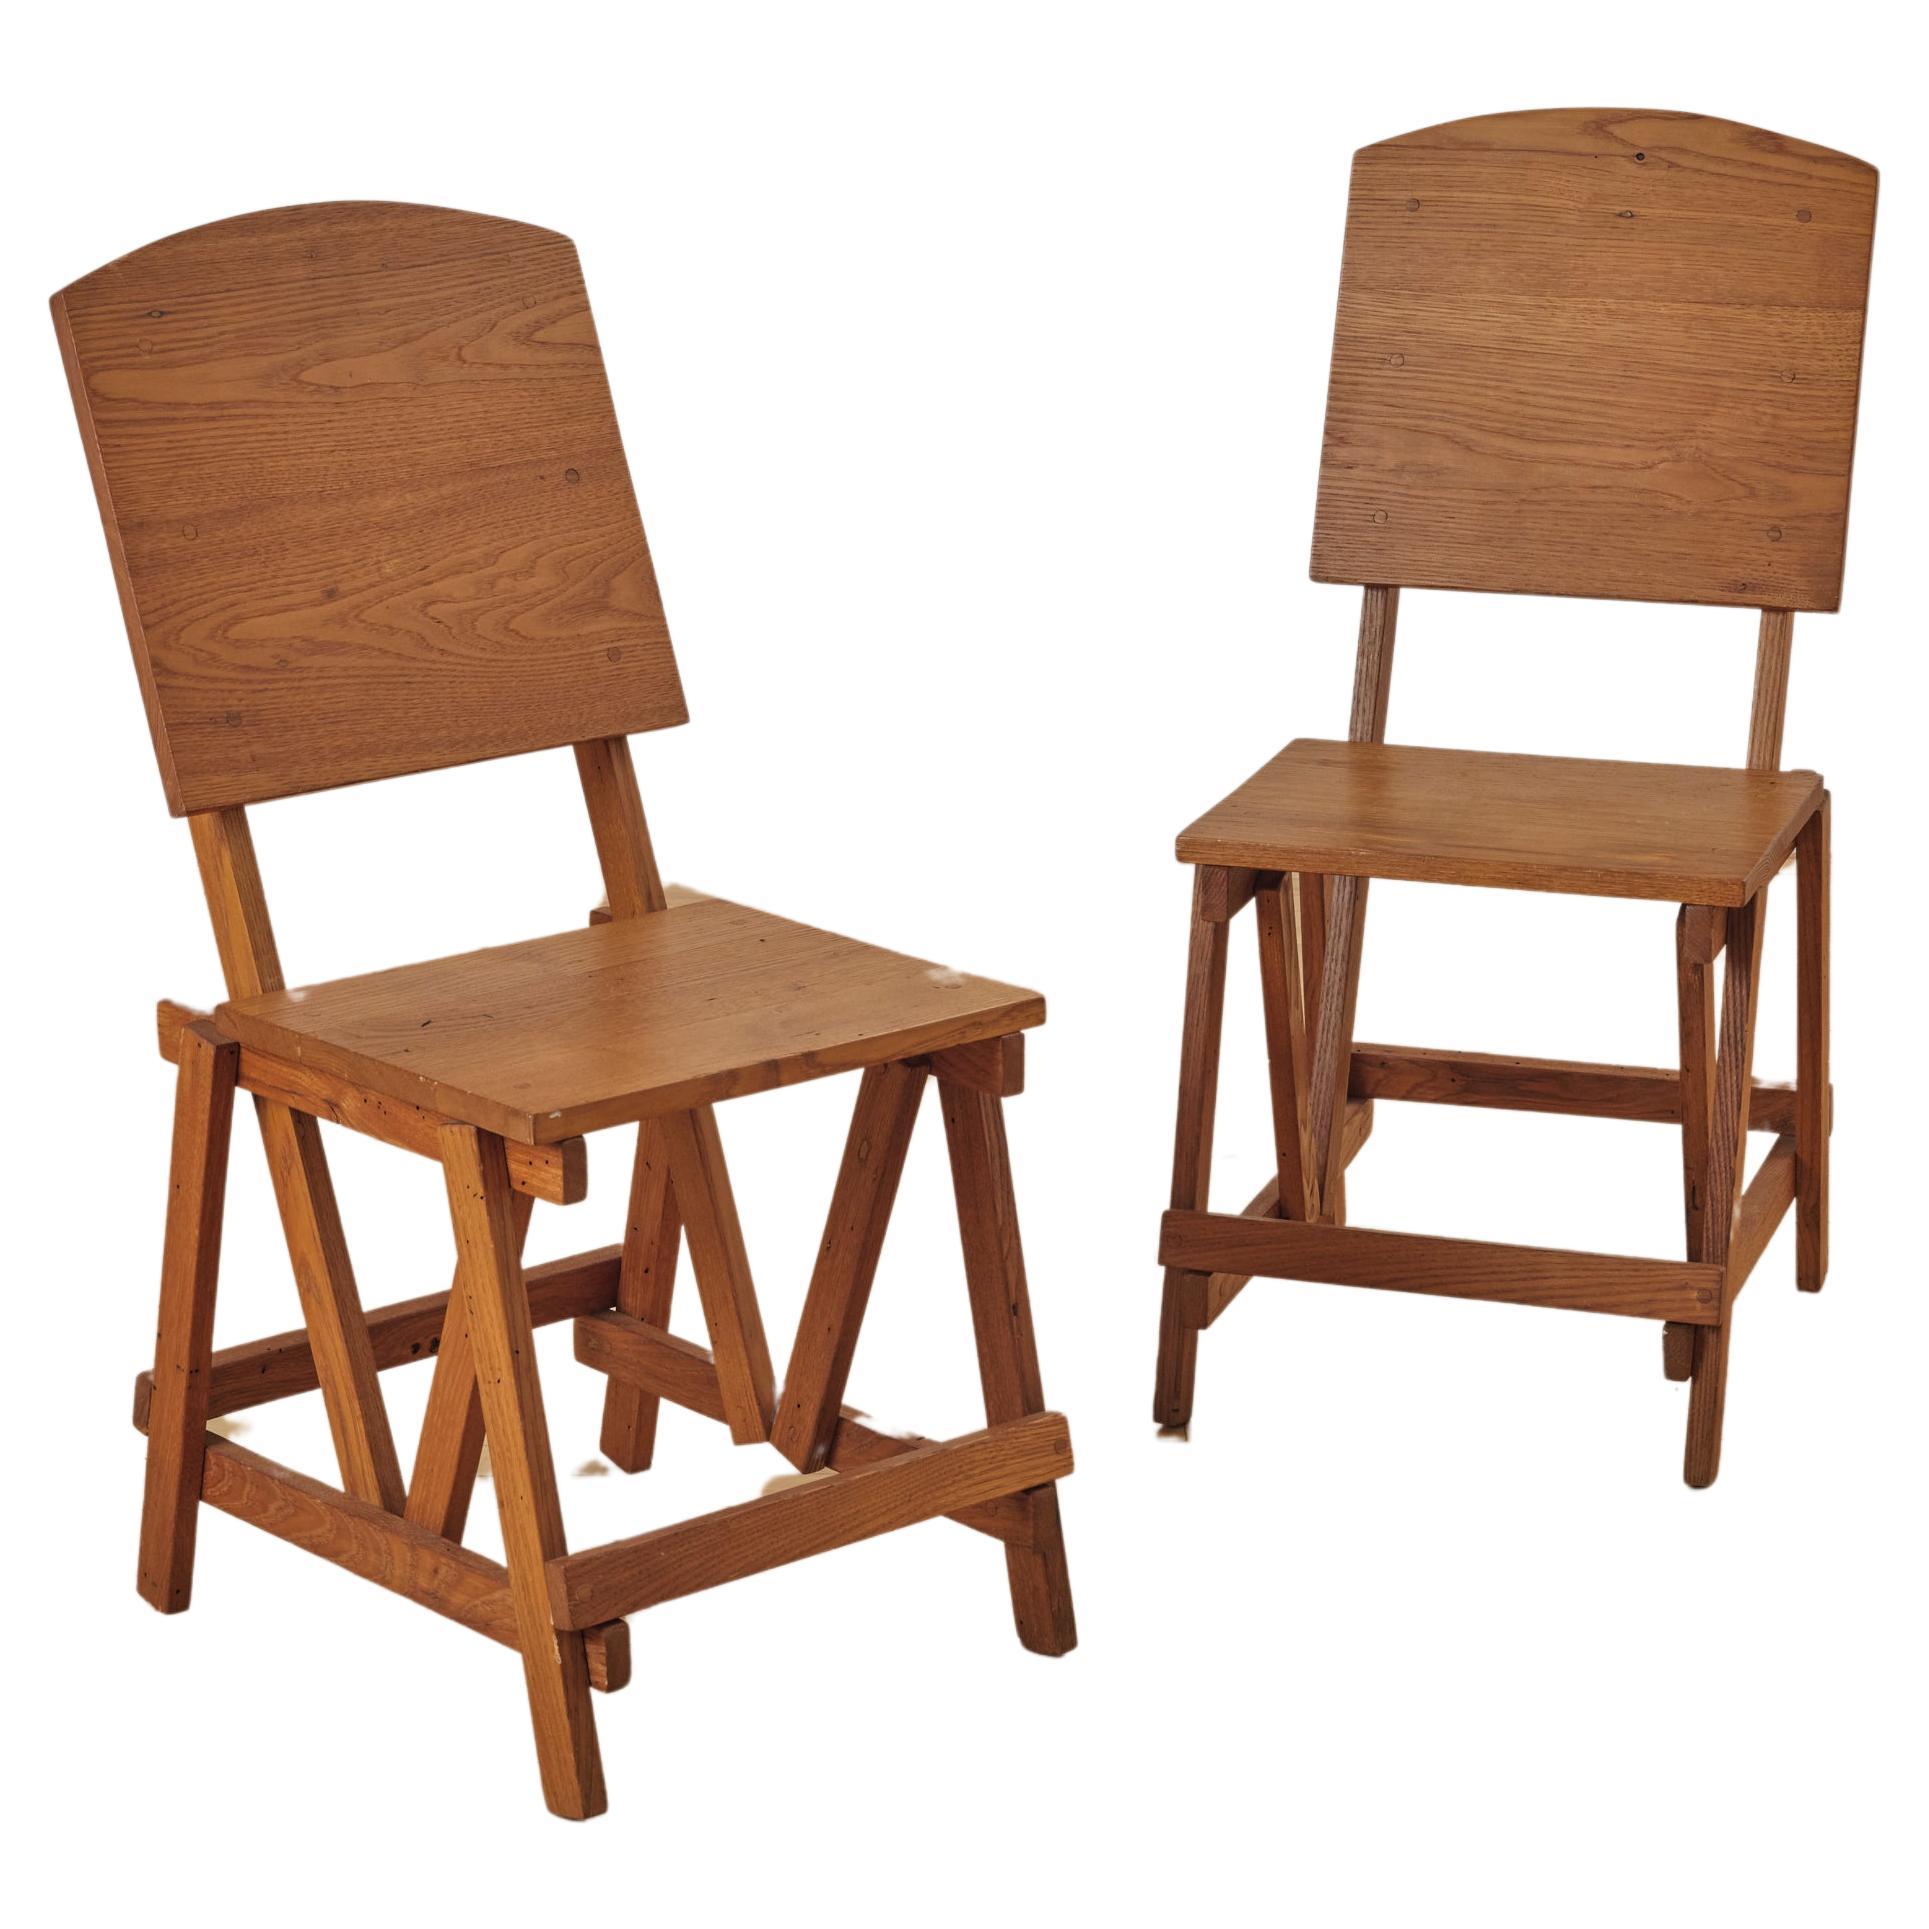 A Pair of Architectural Constructivist Oak Accent Chairs